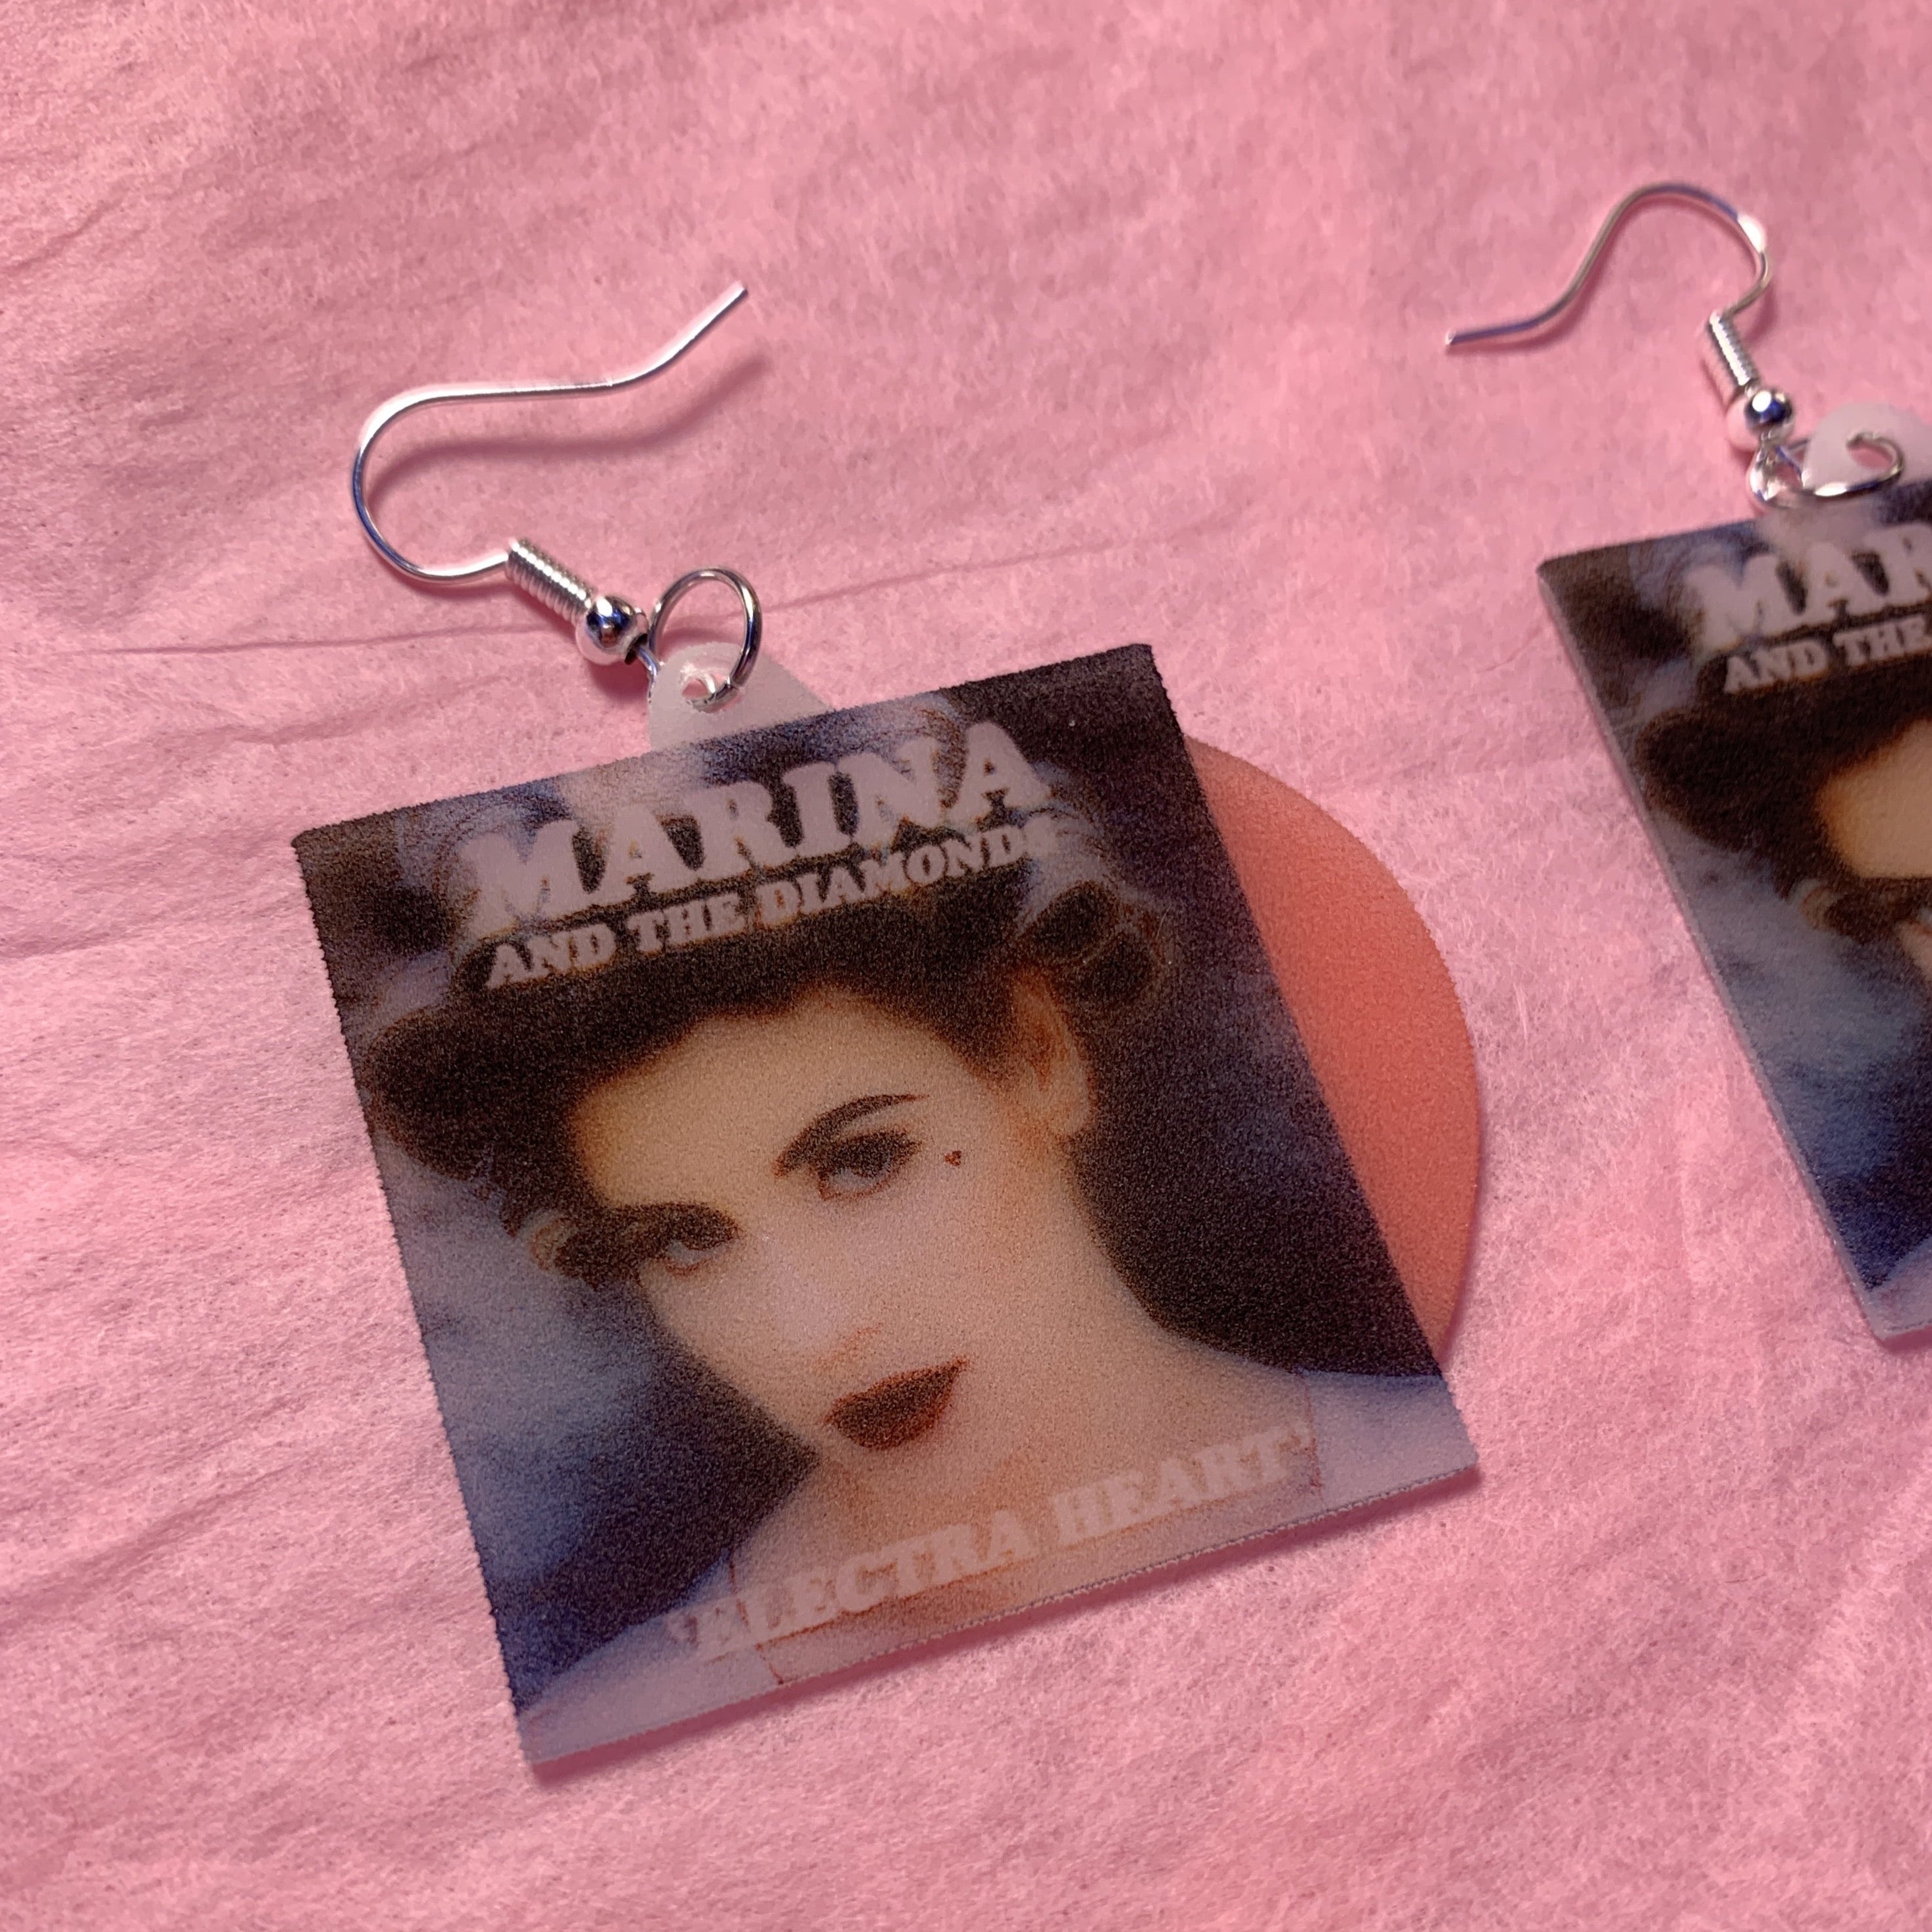 Marina and the Diamonds Electra Heart Vinyl Album Handmade Earrings!